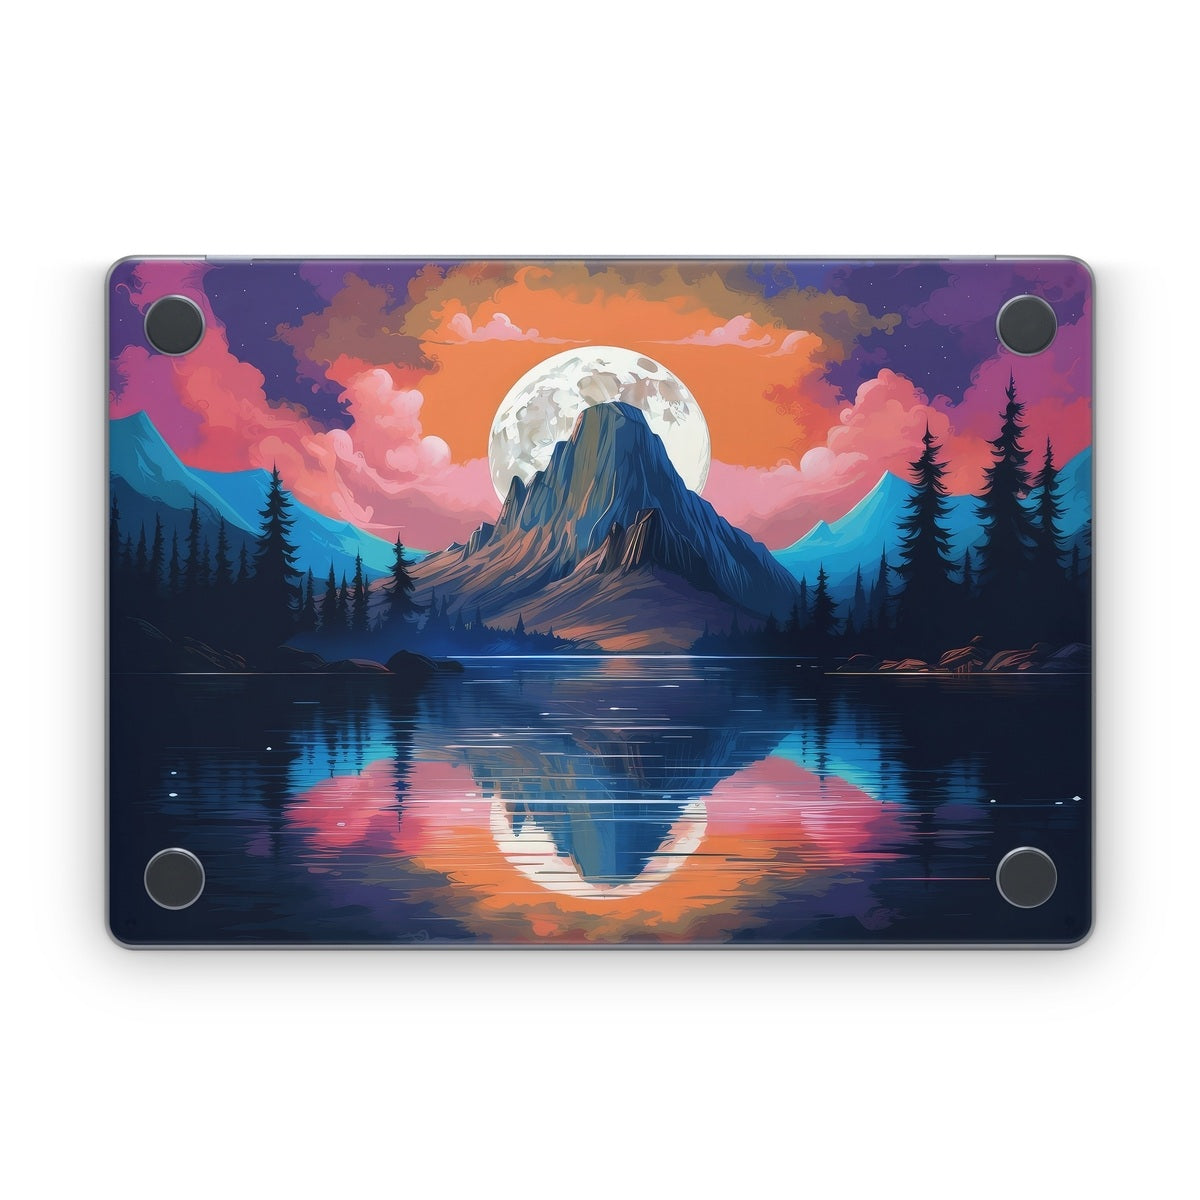 Mountain Moonrise - Apple MacBook Skin